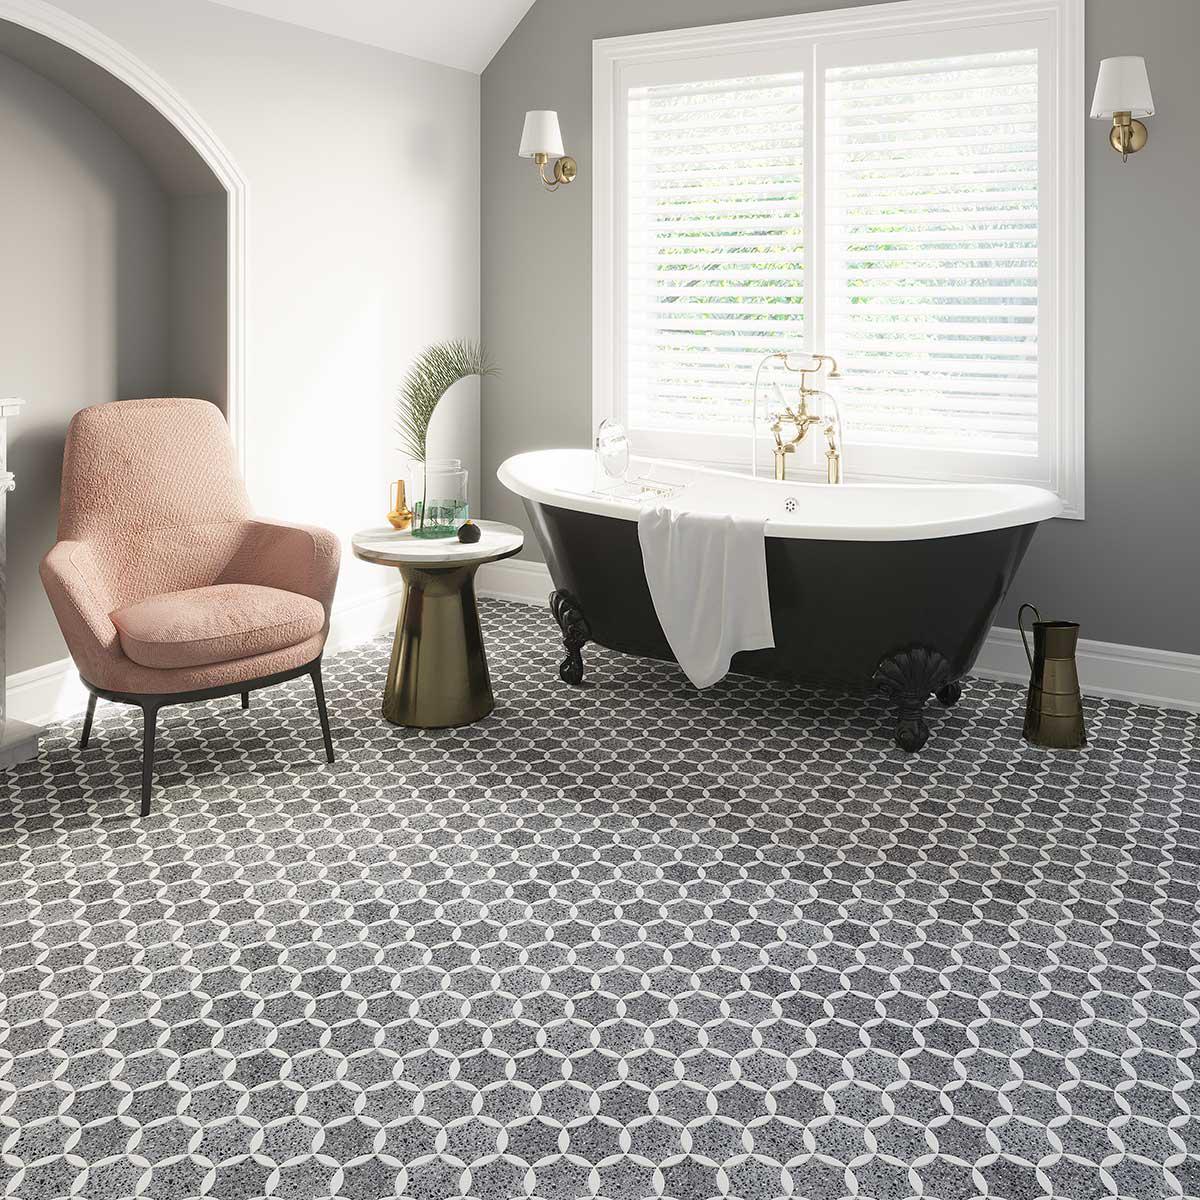 Black and Gray Terrazzo Fleur mosaic bathroom floor with a black claw foot tub